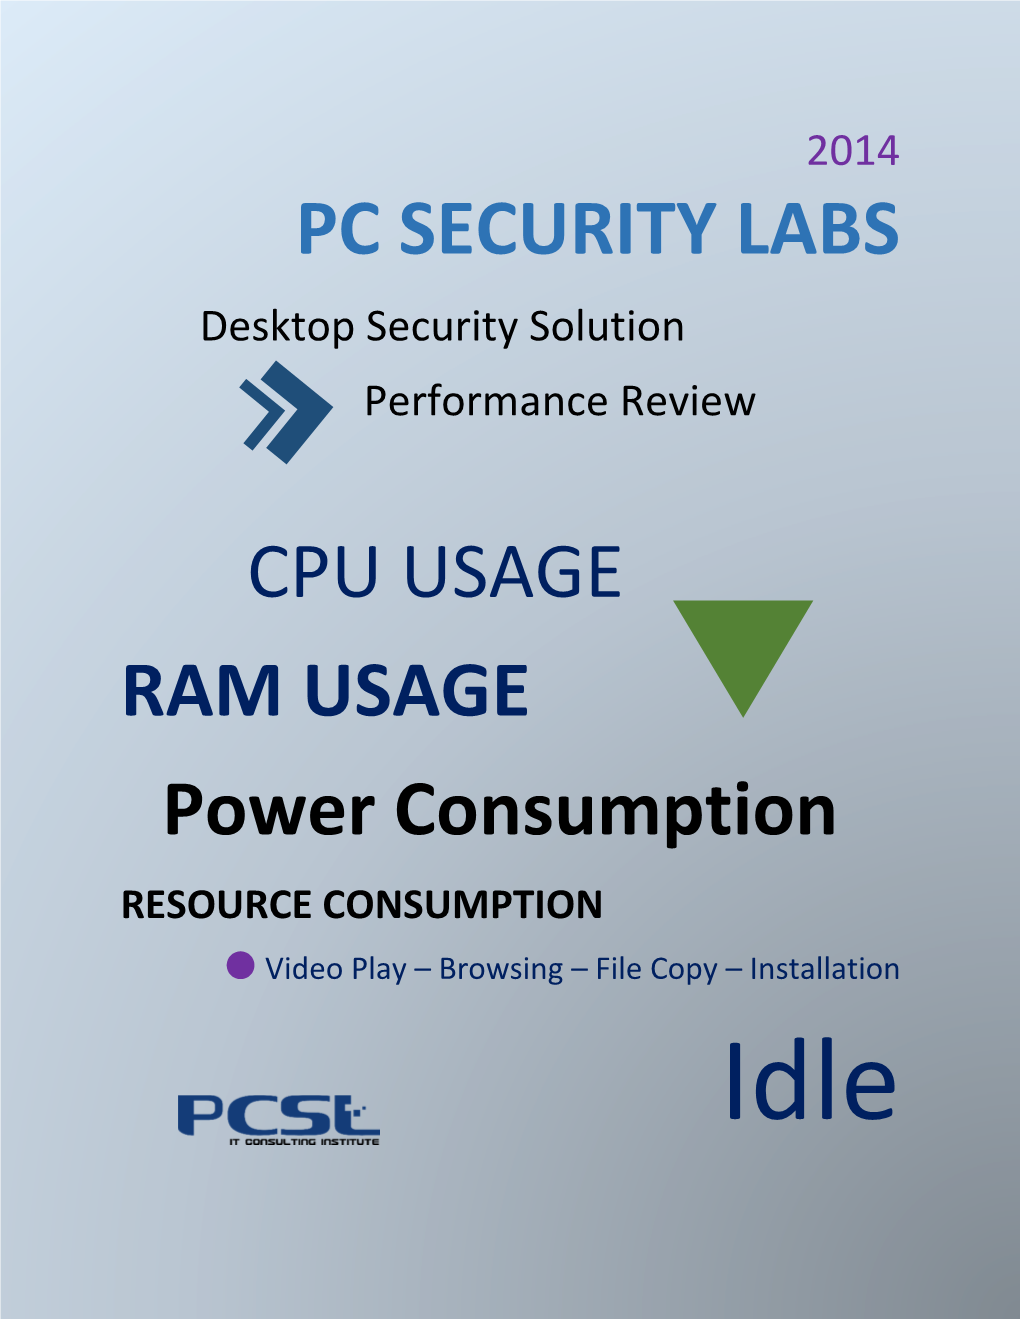 PC SECURITY LABS CPU USAGE RAM USAGE Power Consumption